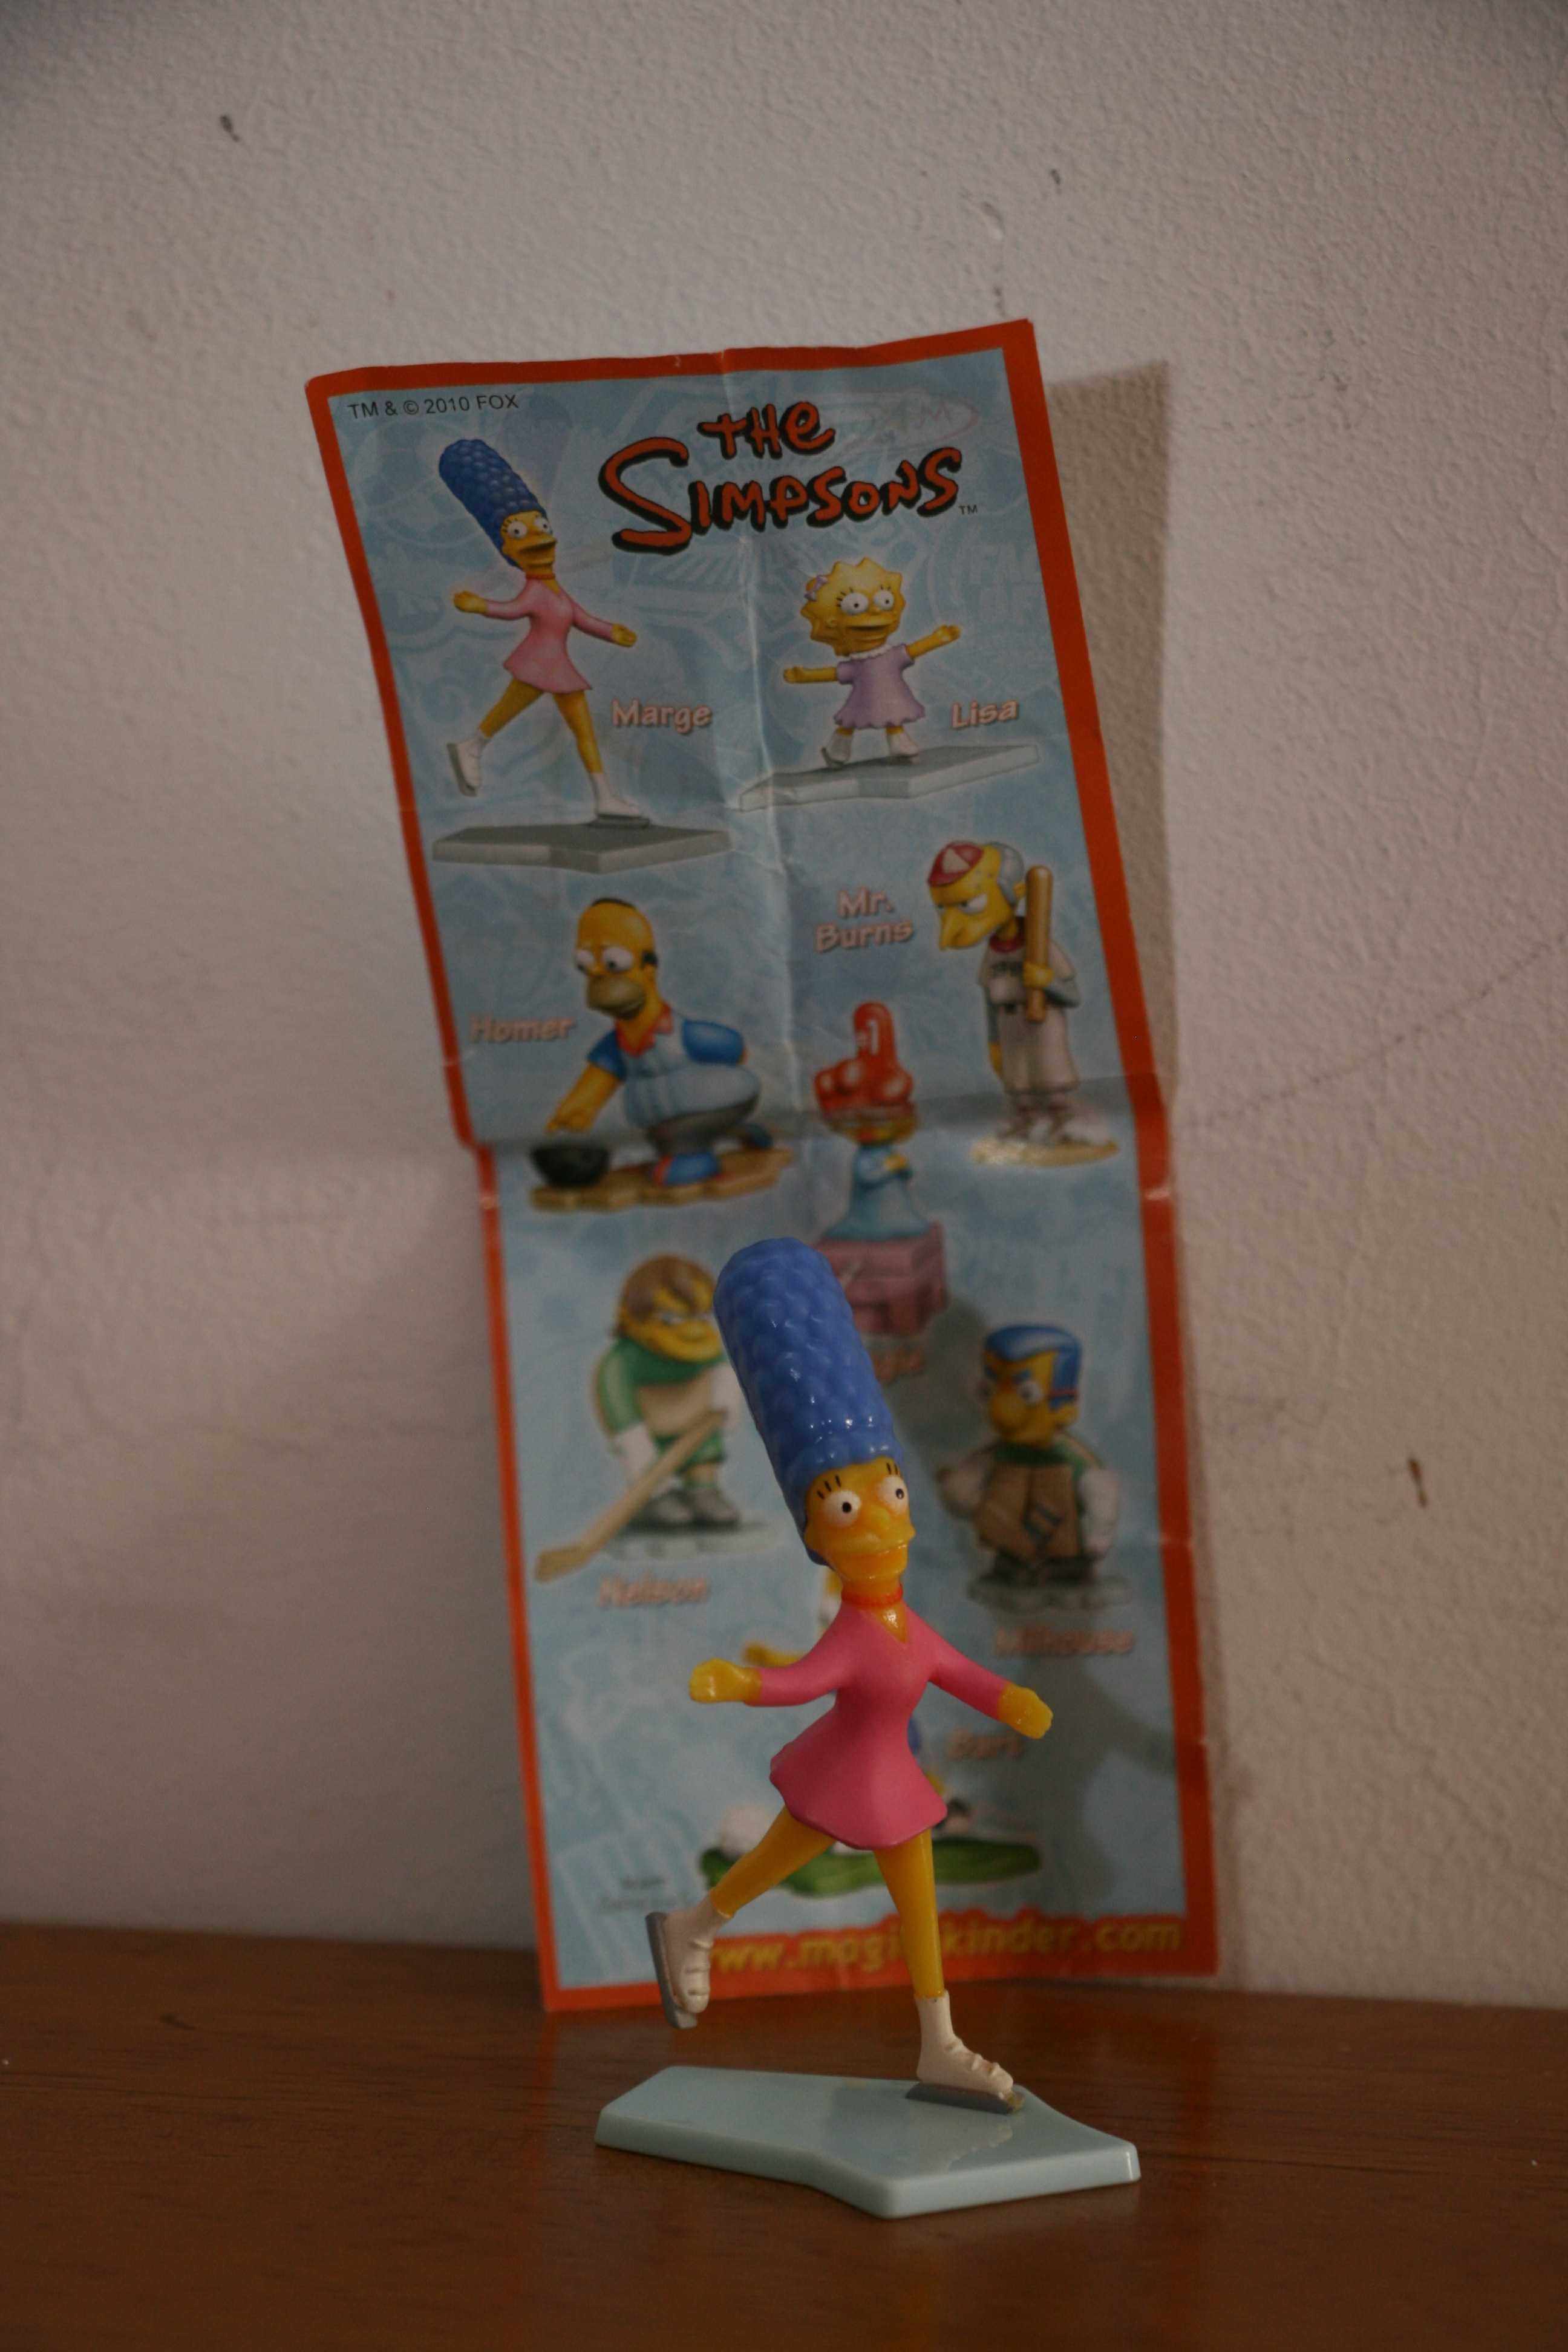 Kinder UN158, "Marge" da Série The Simpsons,